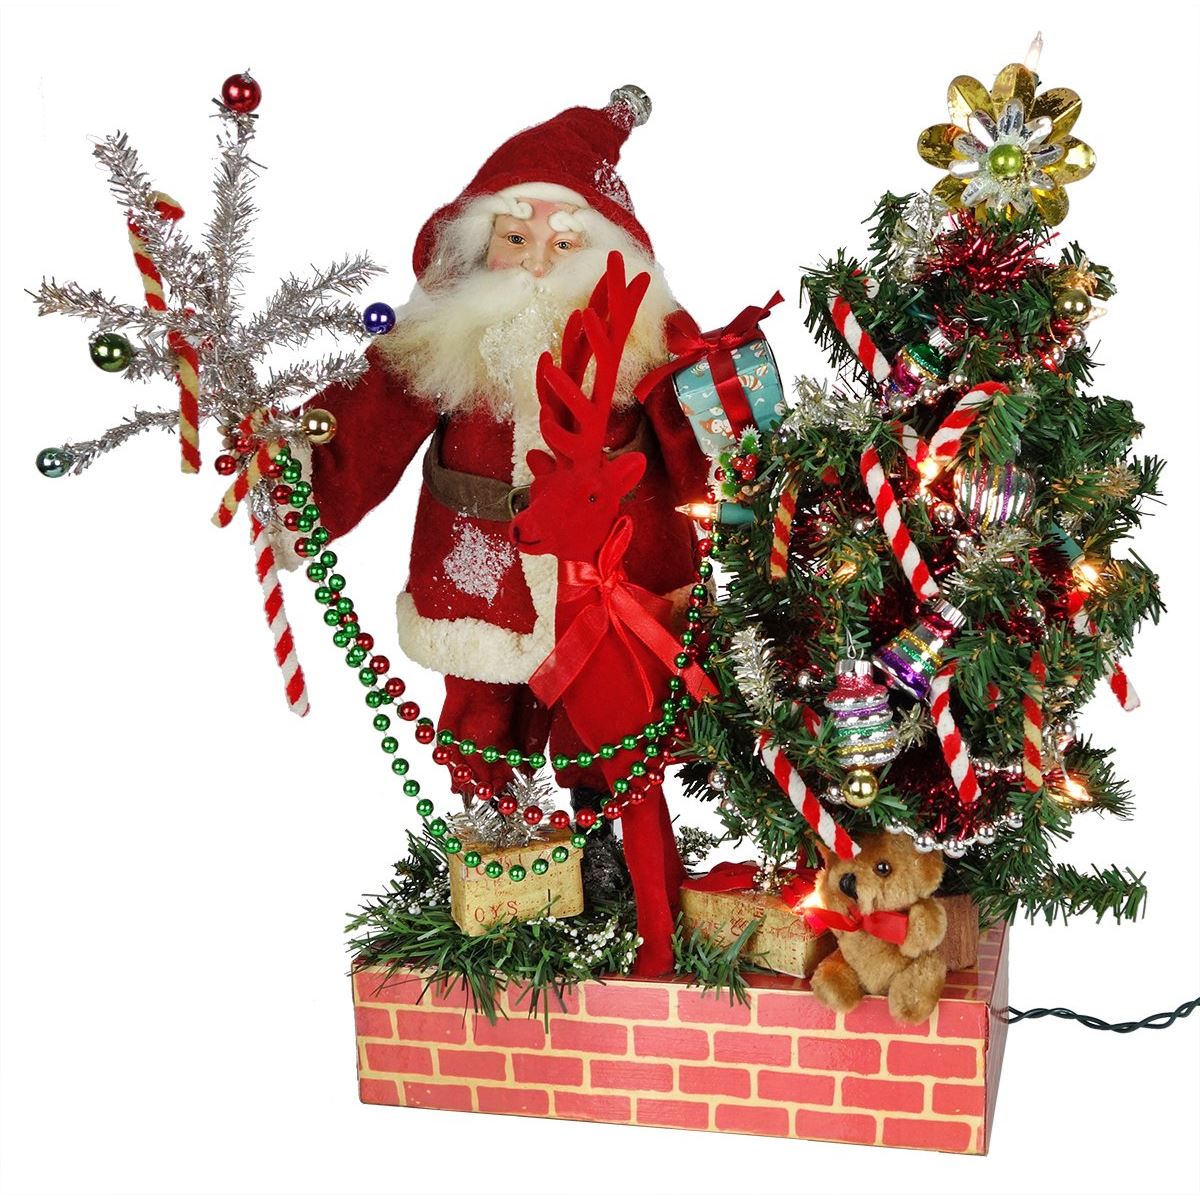 Decorating The Tree Santa